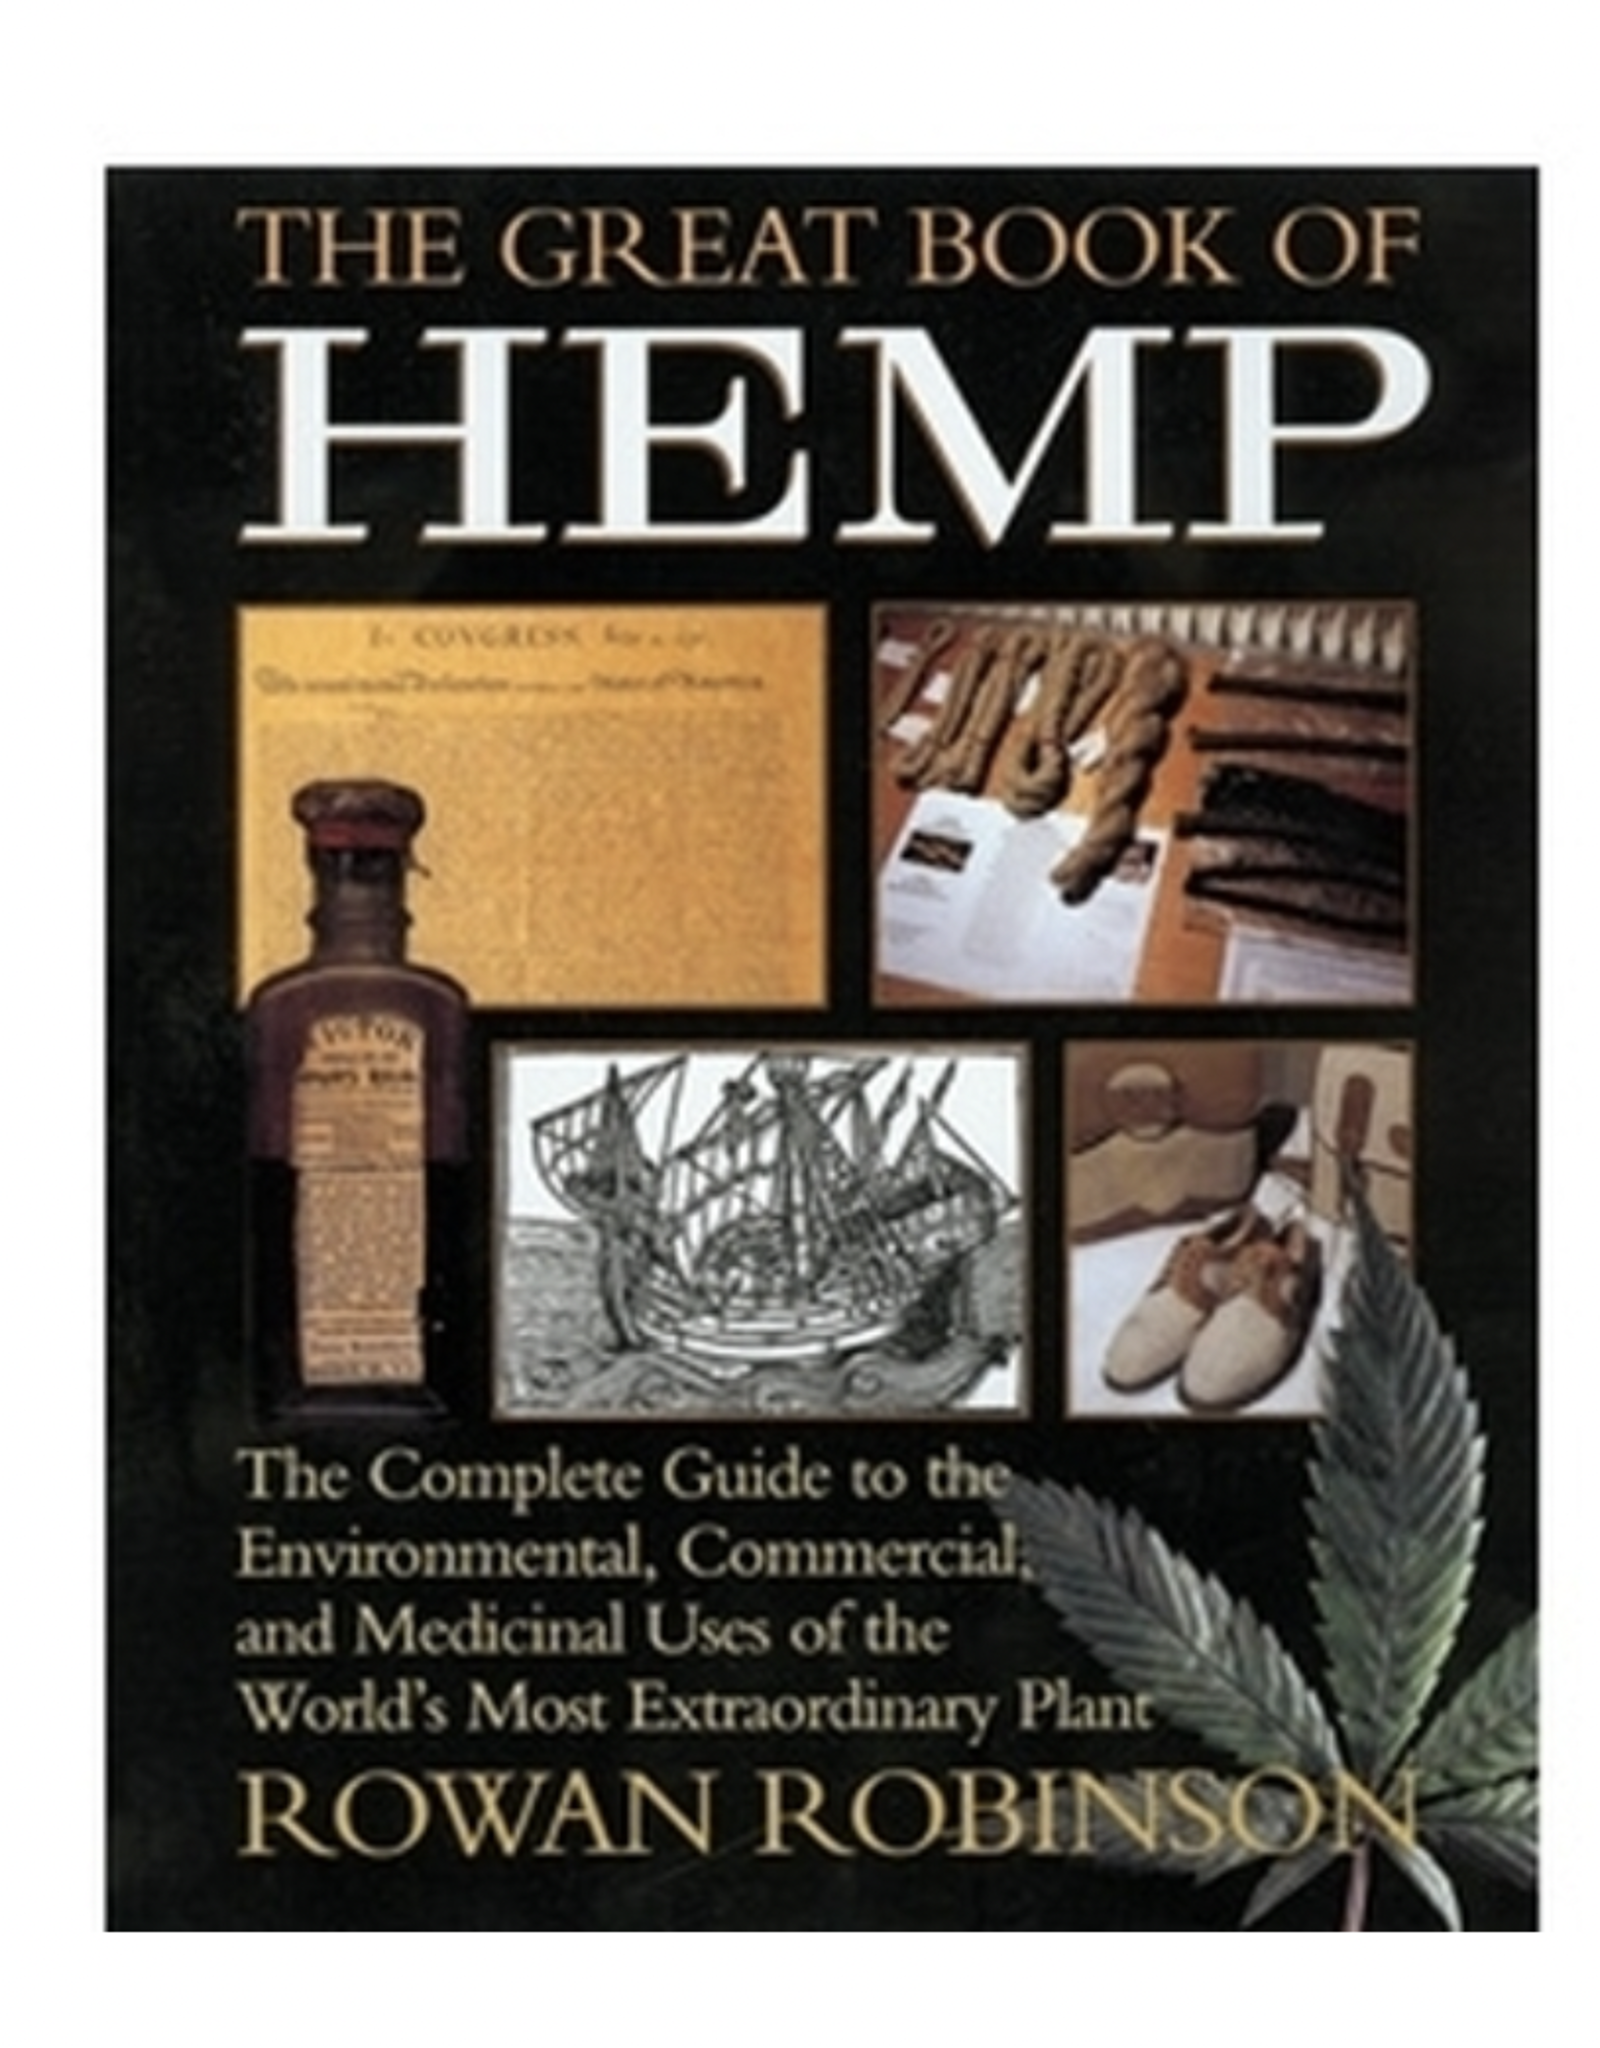 Great Book of Hemp by Rowan Robinson